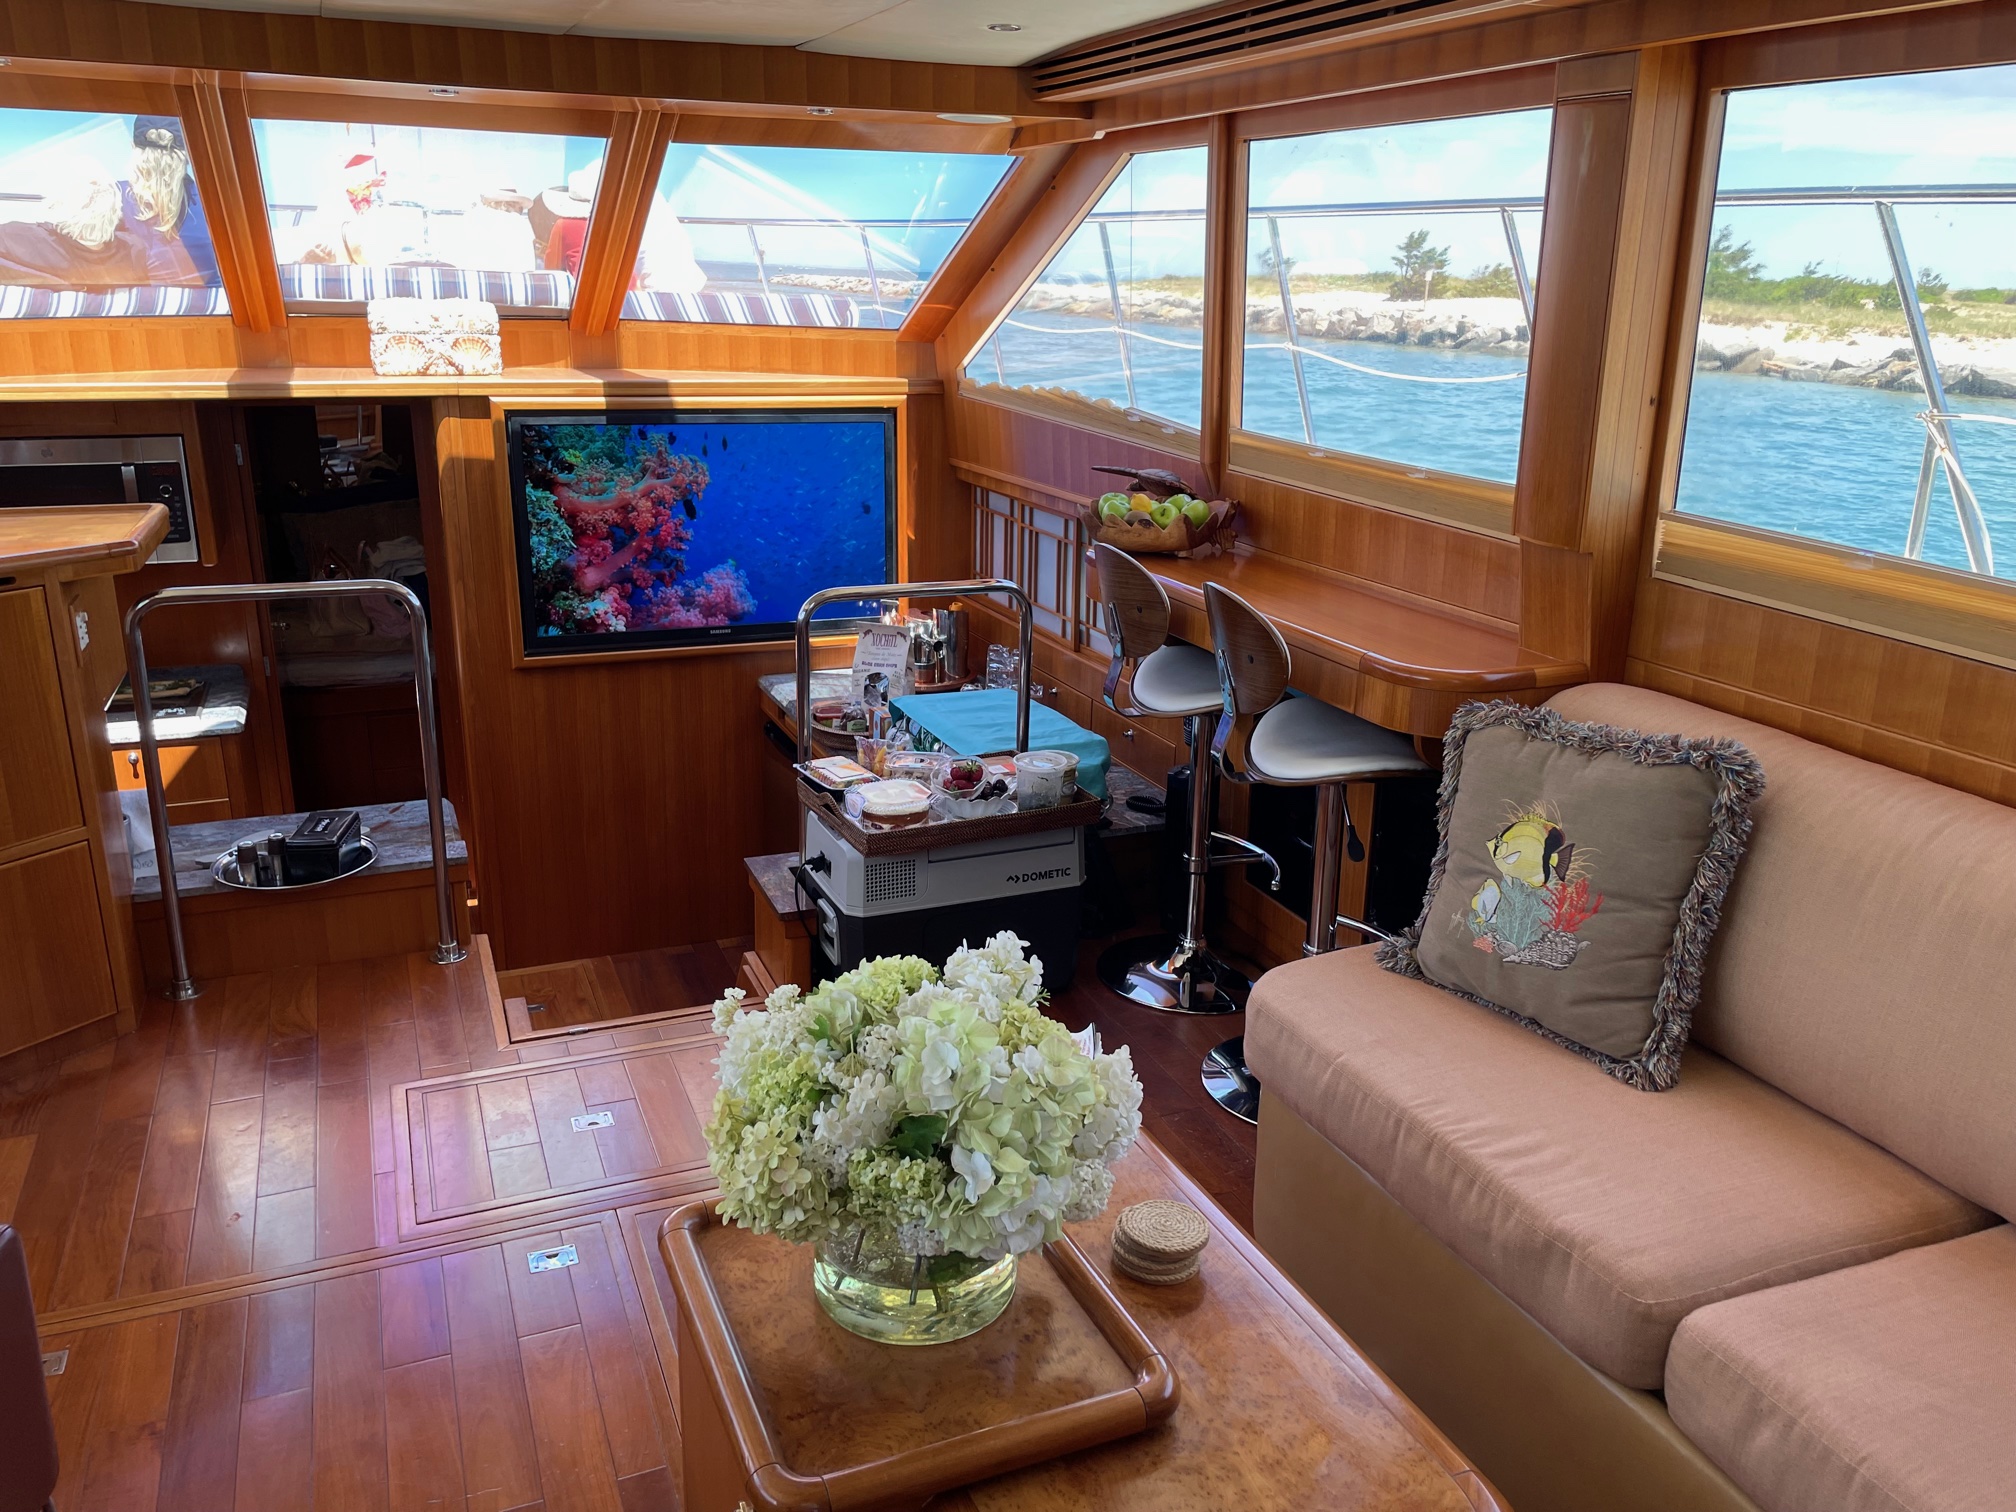 Inside Pure Pleasure, a 50-foot yacht